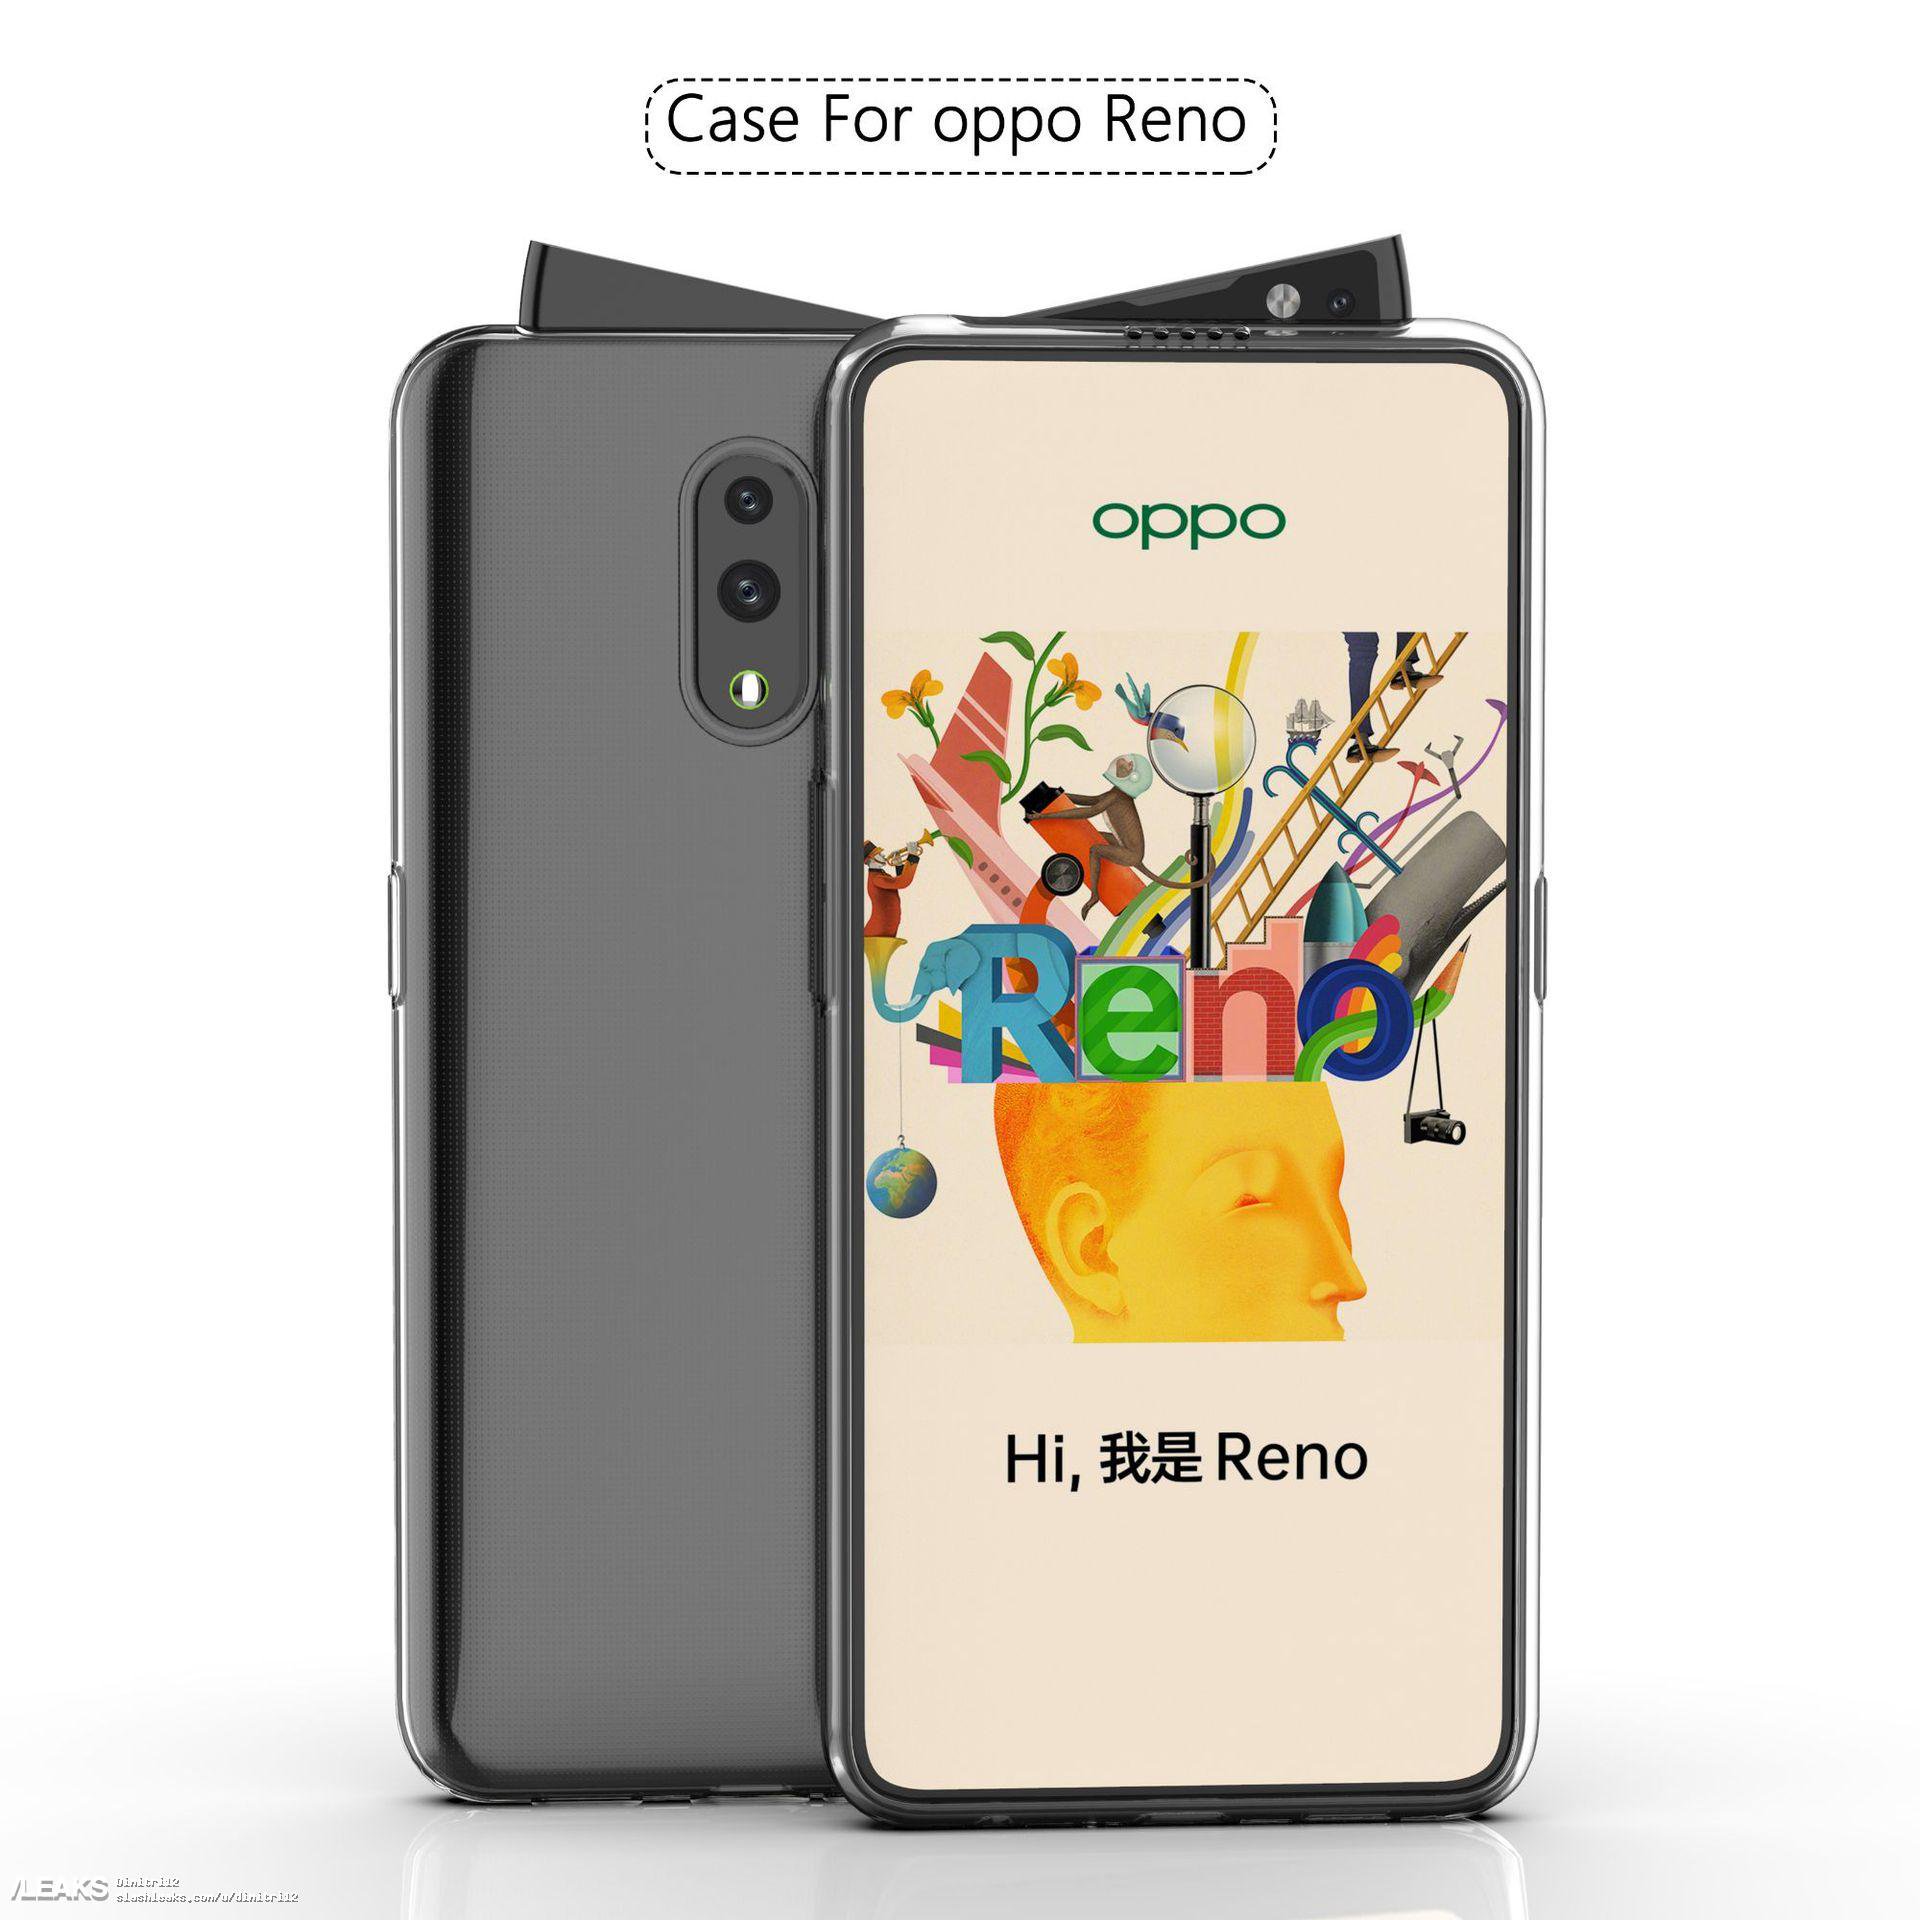 OPPO-Reno-case-renders